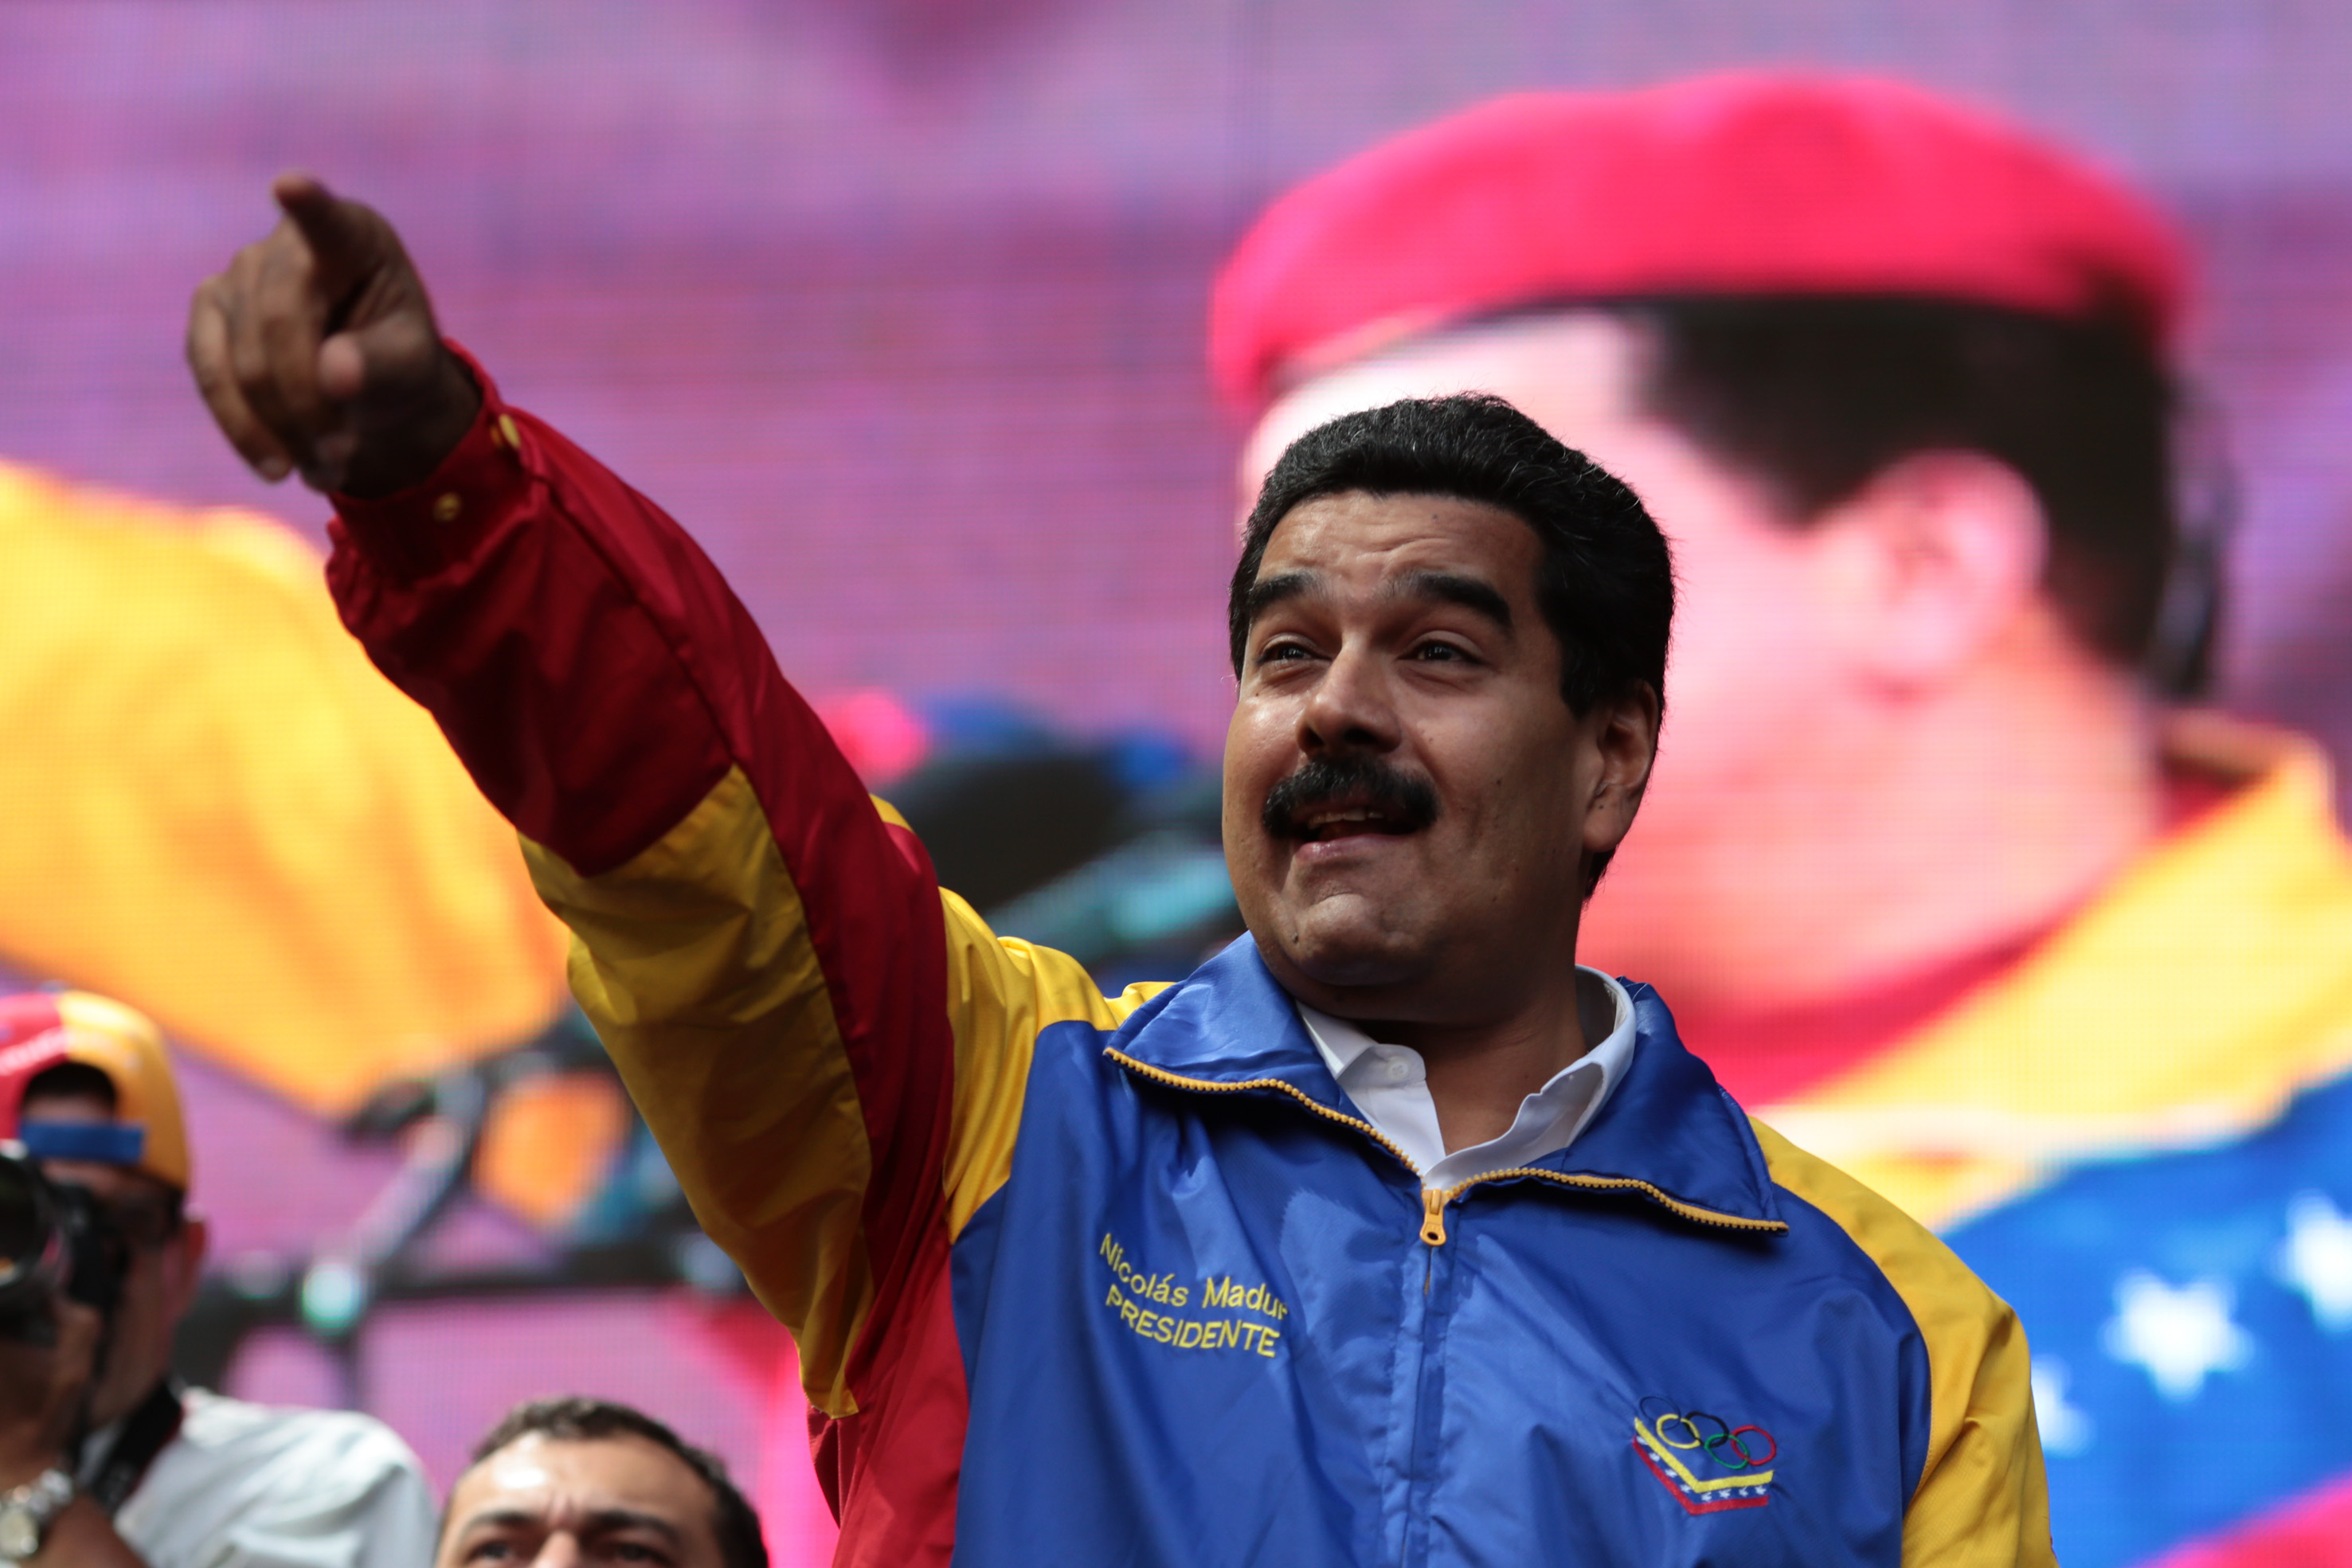 Swing Maduro